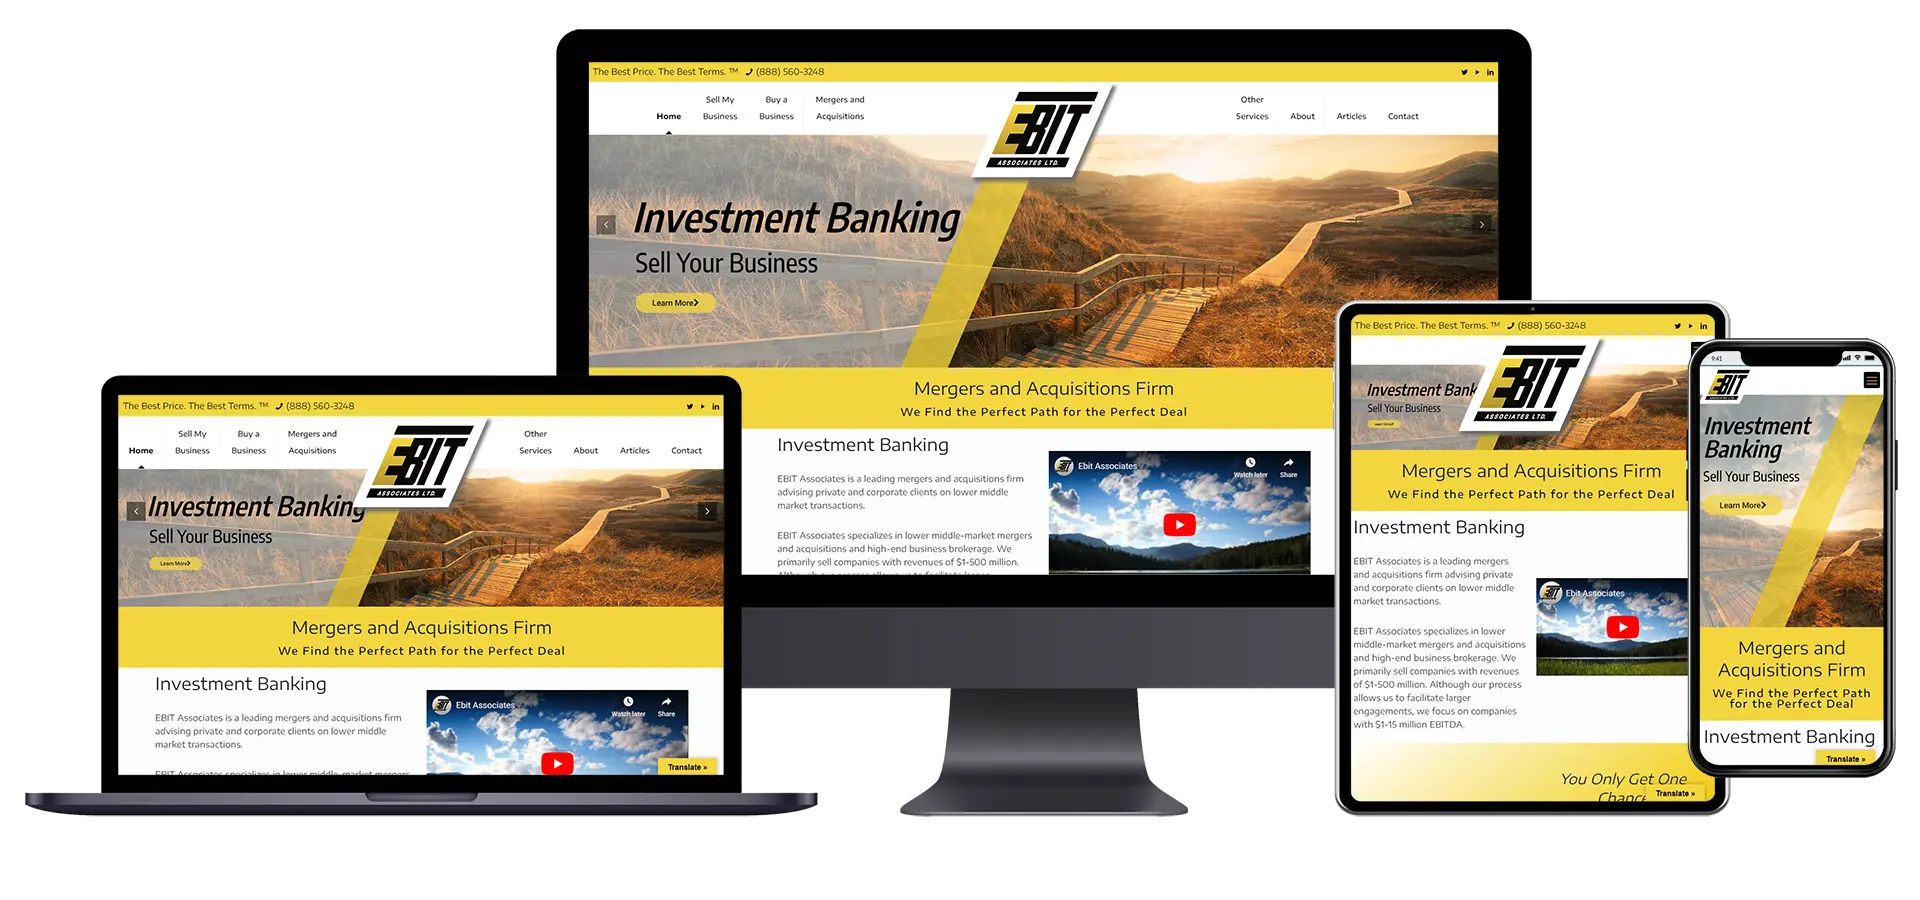 Mergers and Acquisitions Company Website - EBIT Associates - Tarpon Springs FL